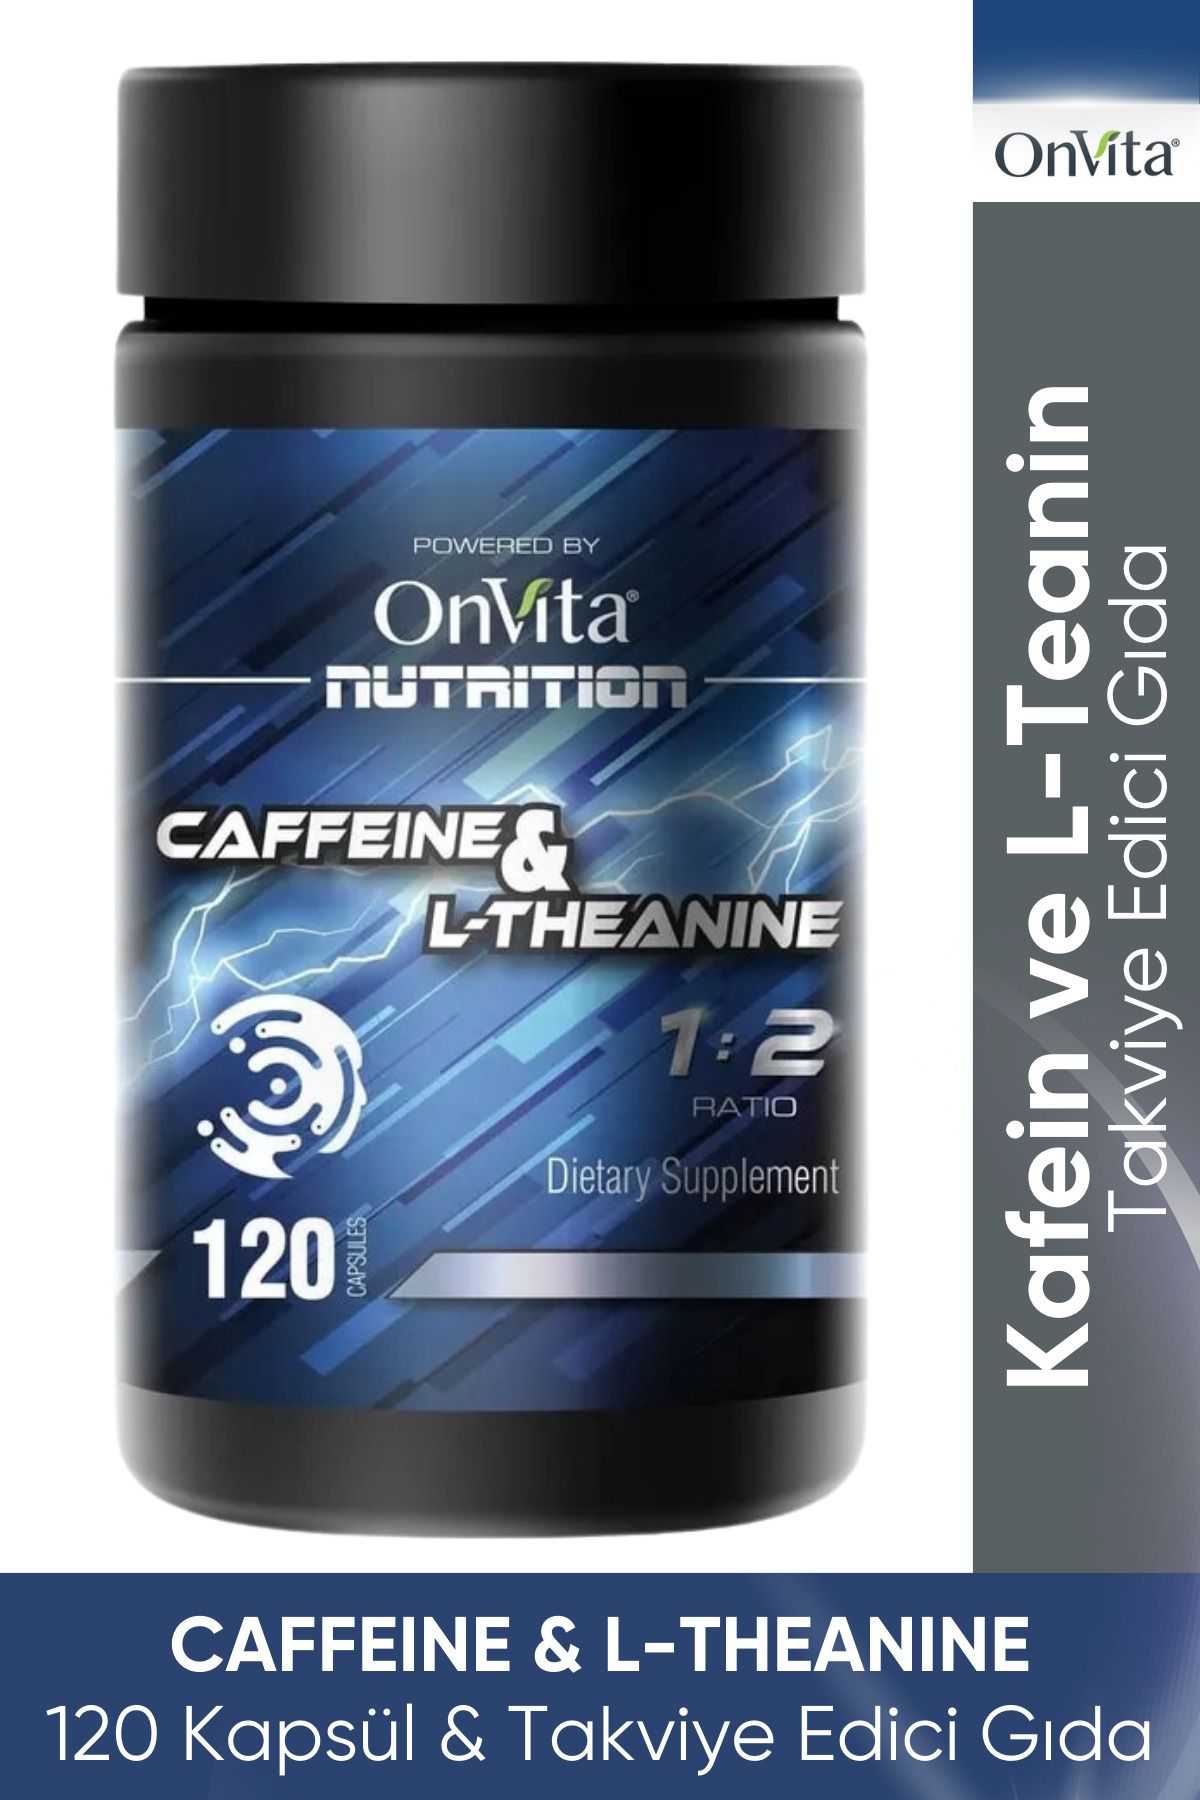 Onvita Nutrition Caffeine & L-theanine